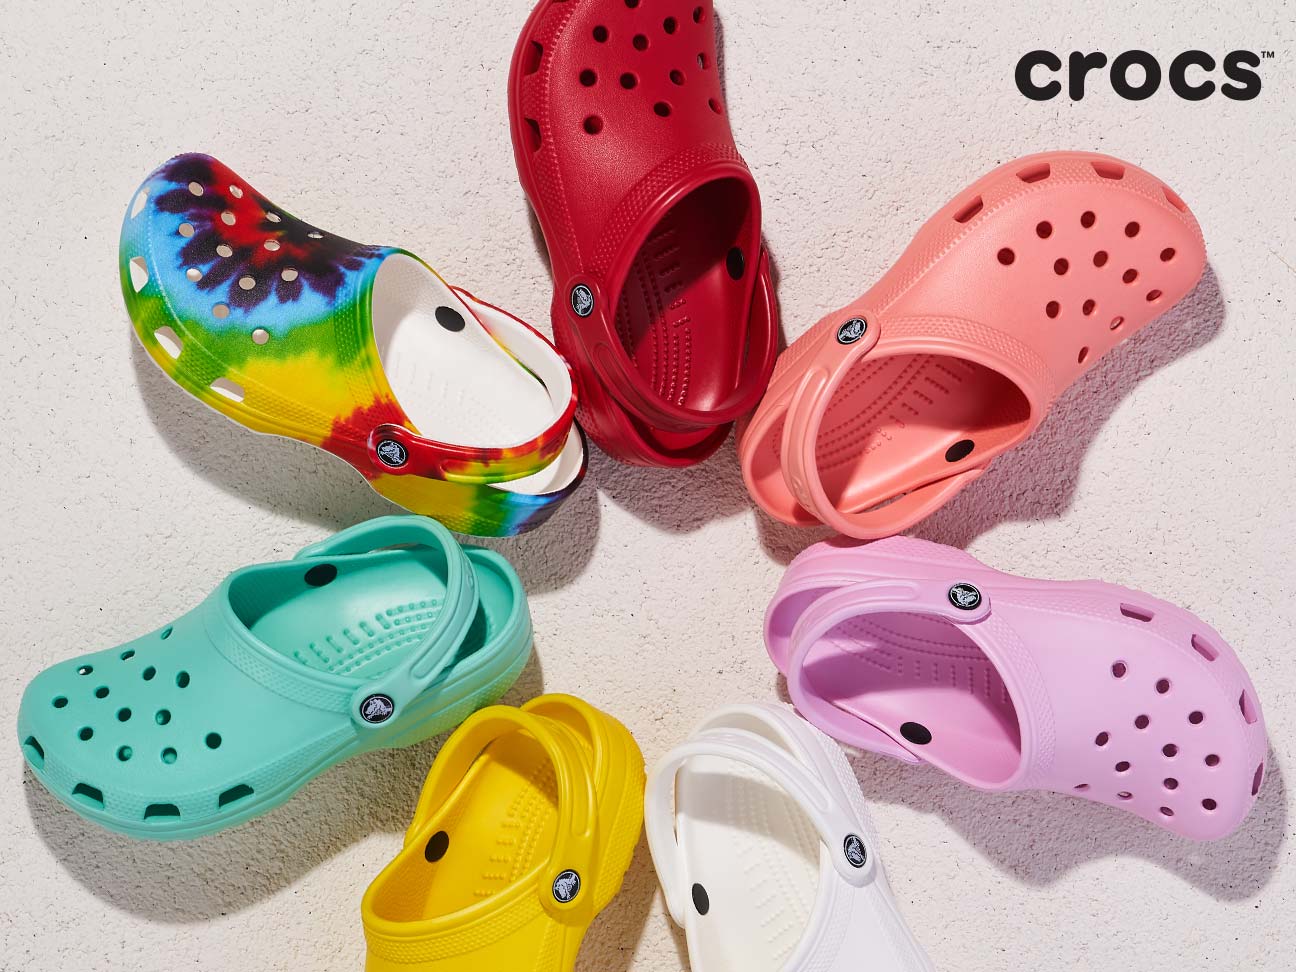 where can i buy crocs near me